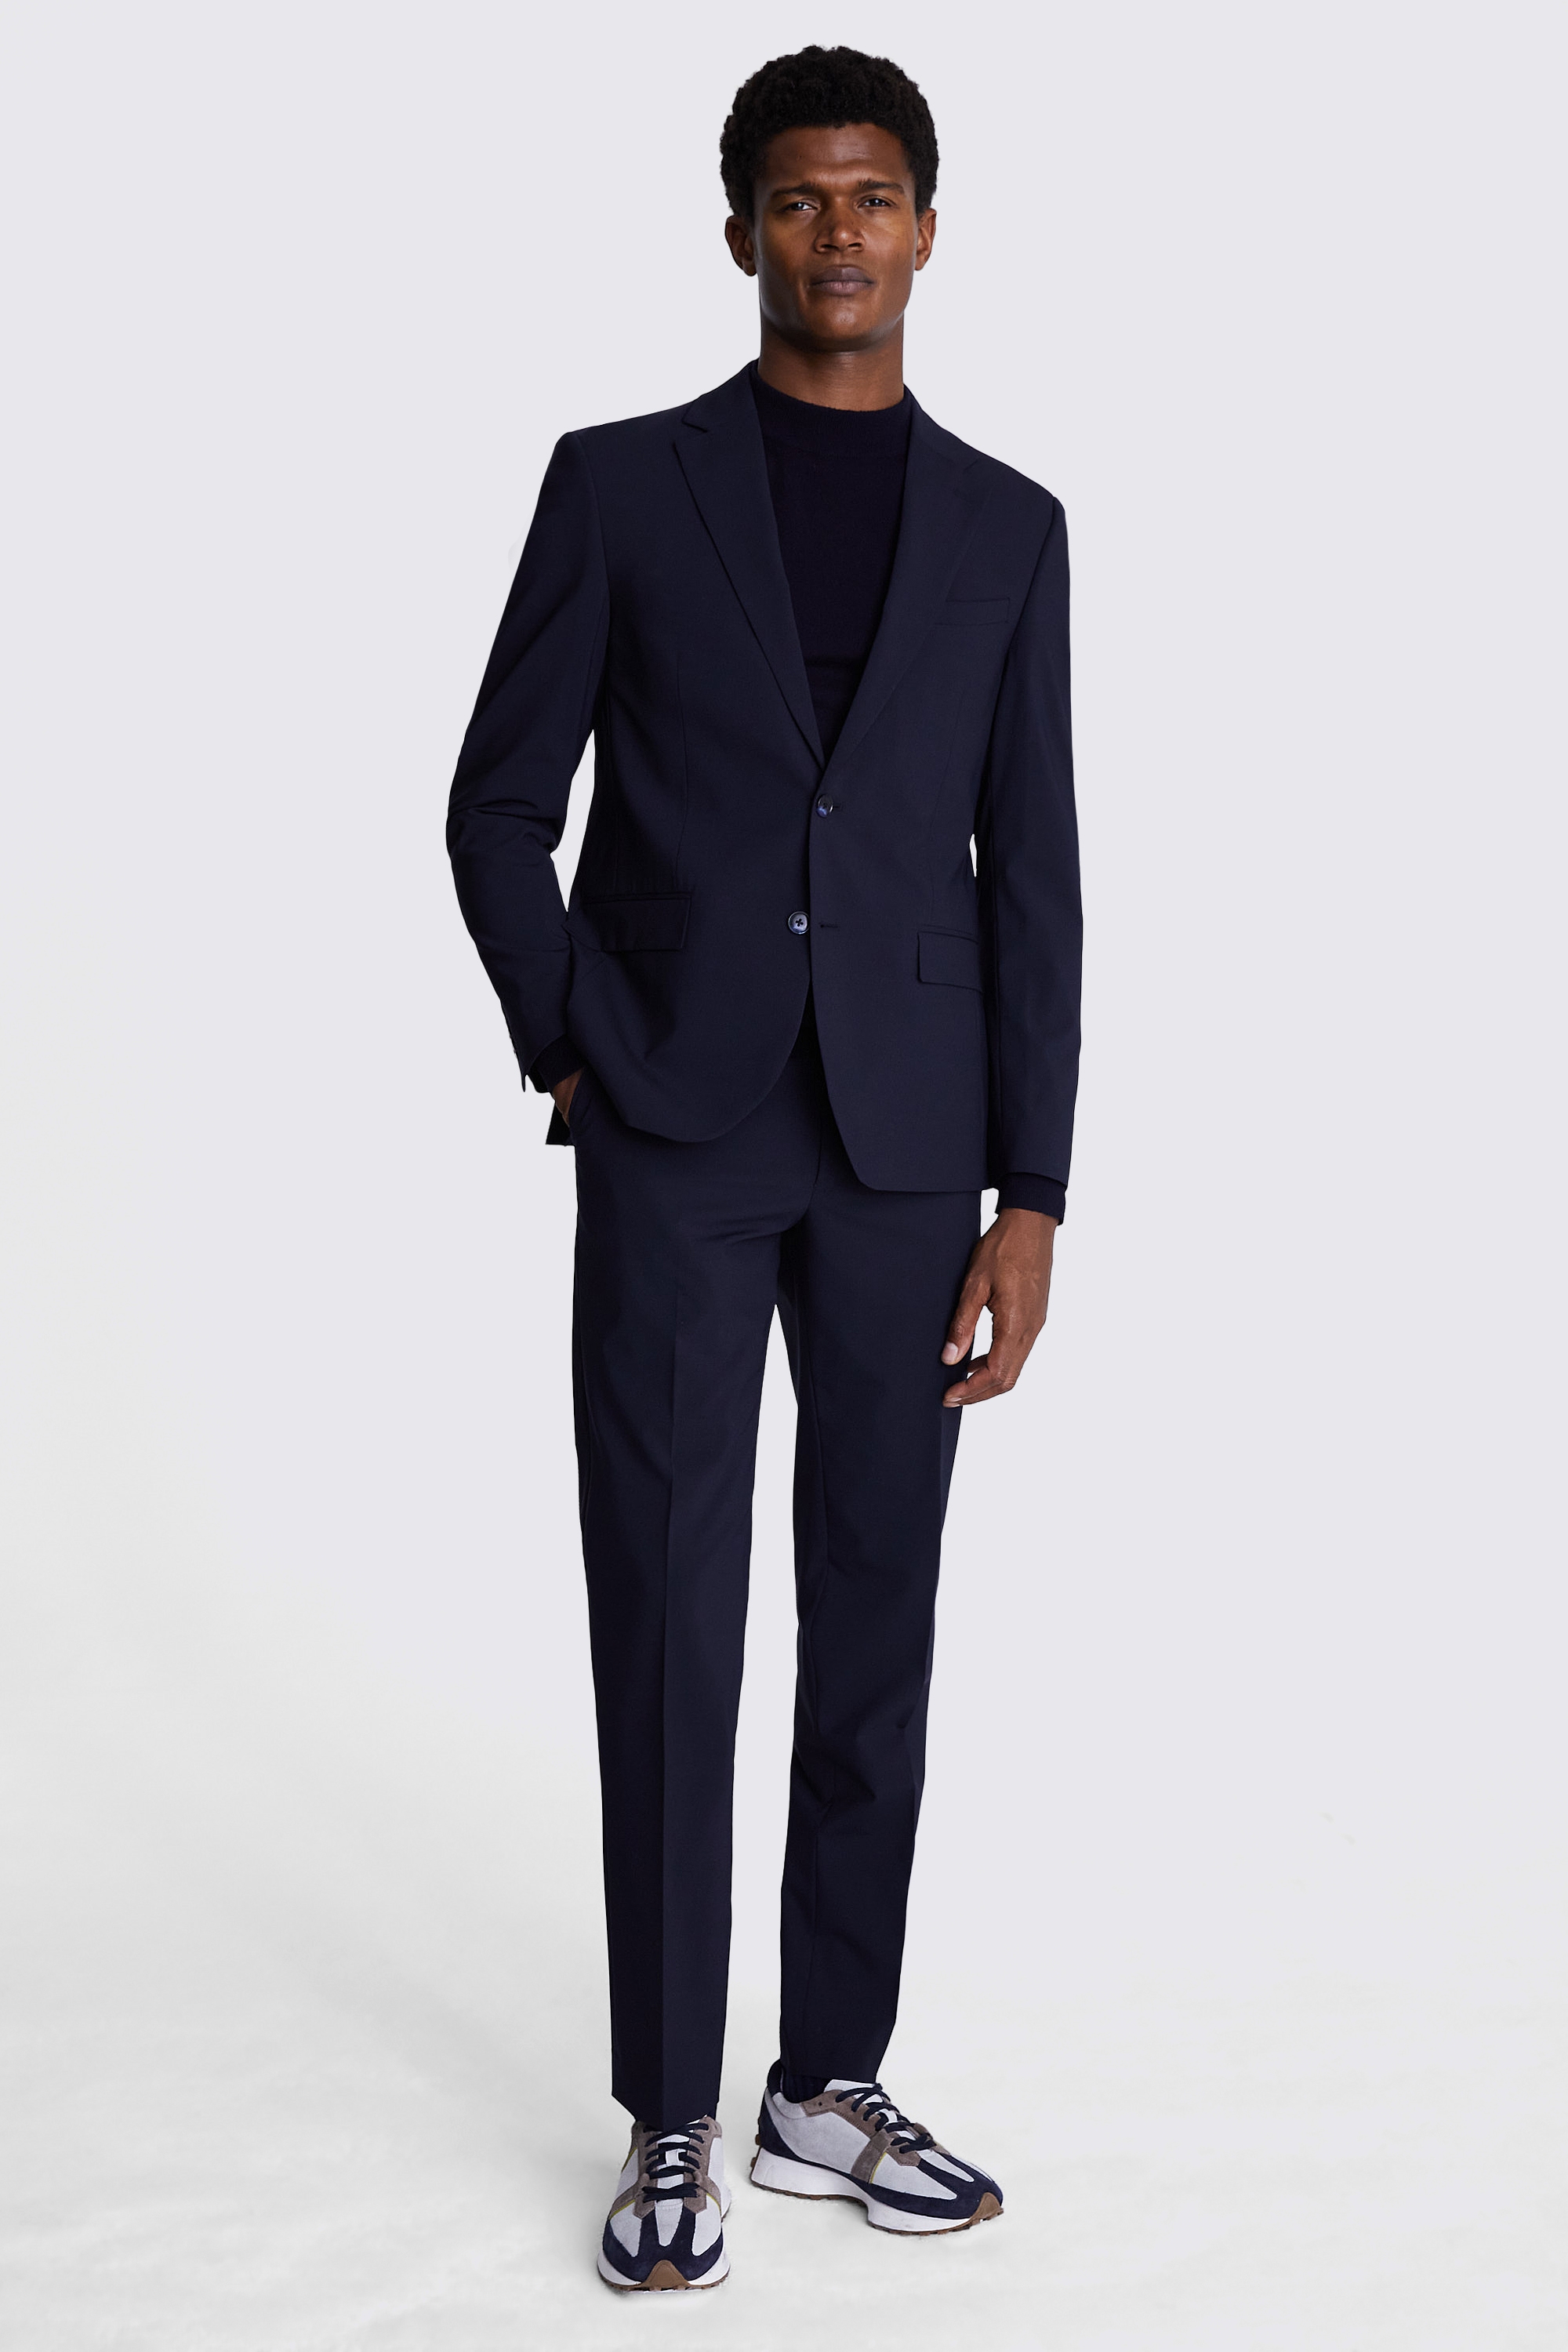 DKNY Slim Fit Navy Jacket | Buy Online at Moss